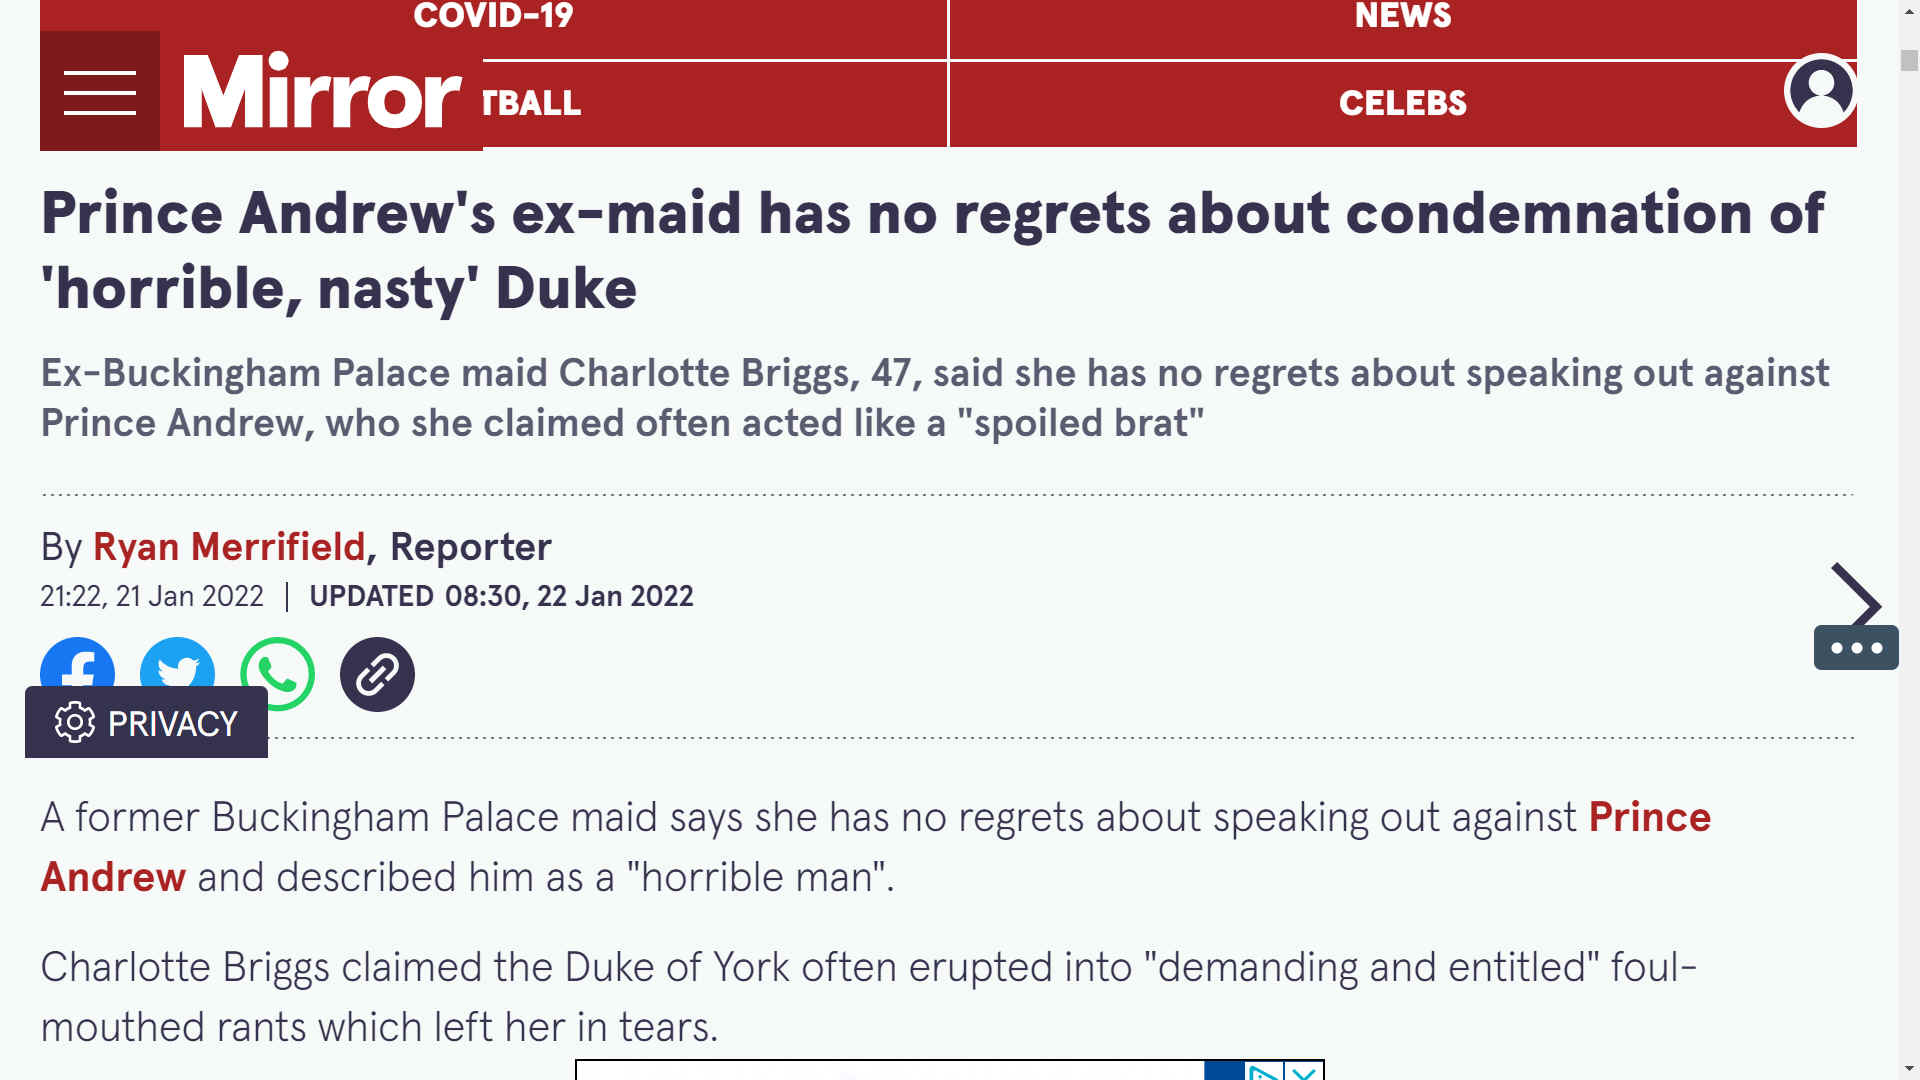 Buckingham Palace maid, Charlotte Briggs, says Duke of York was nasty spoiled brat